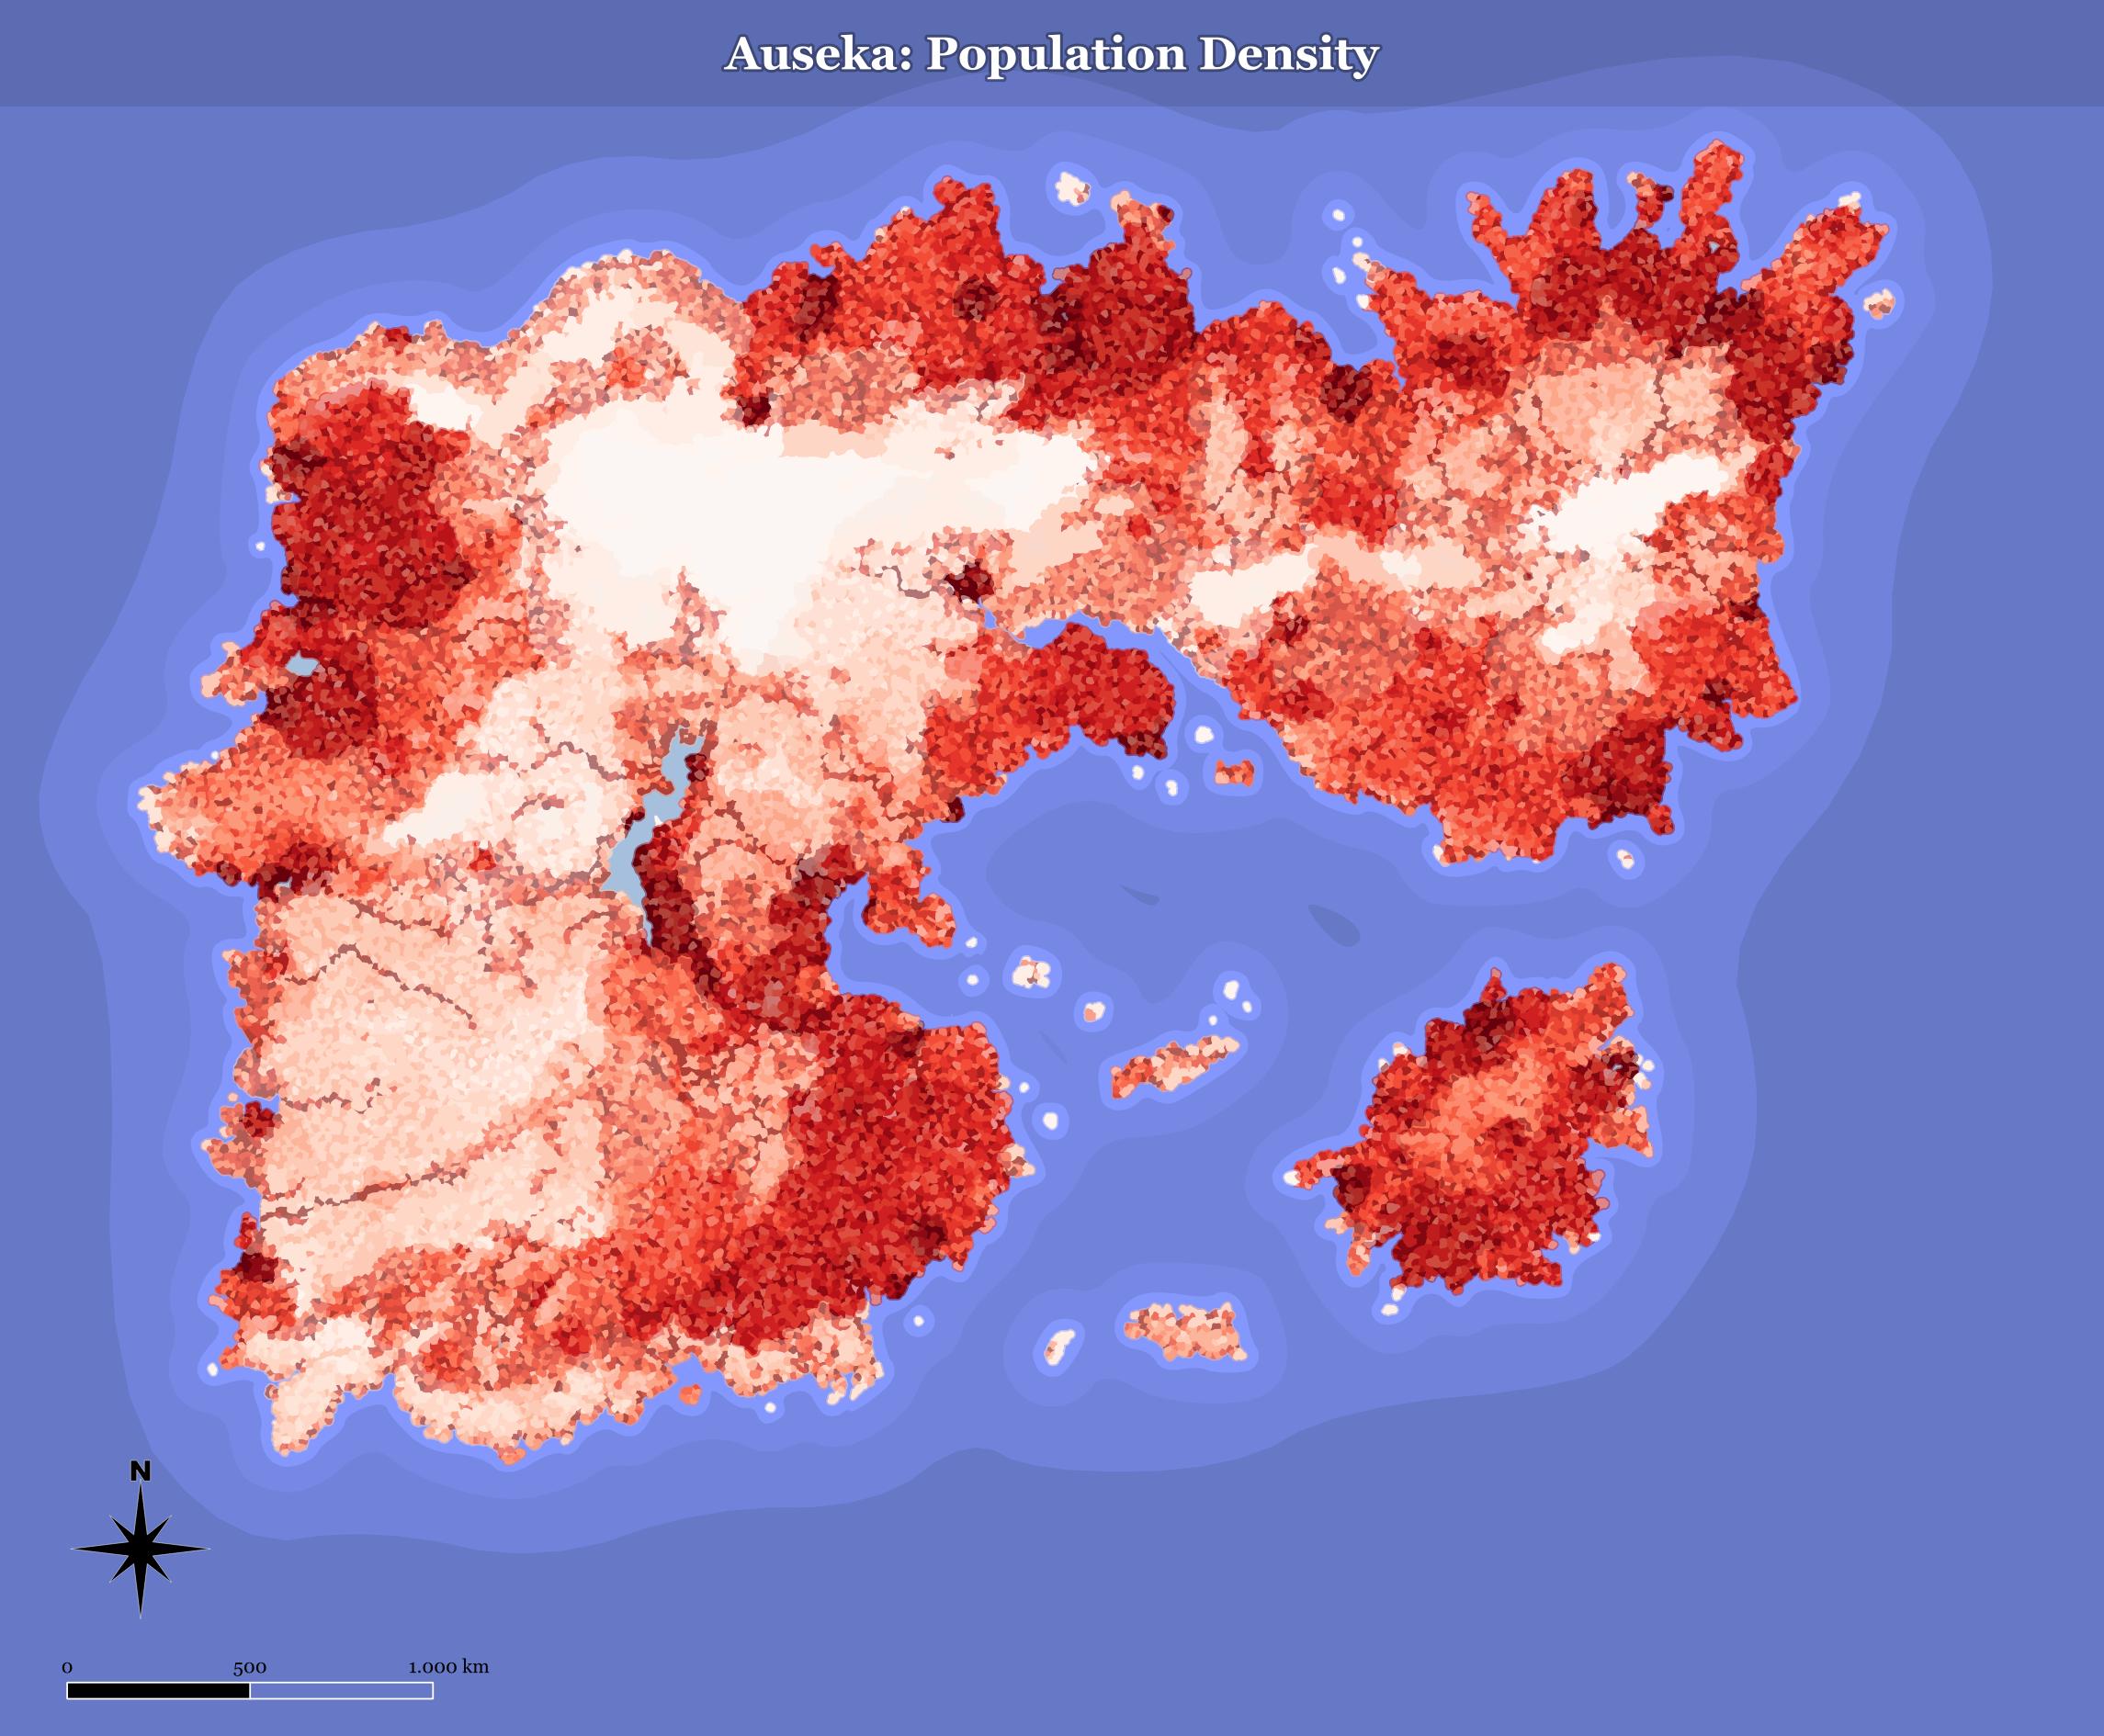 population density map